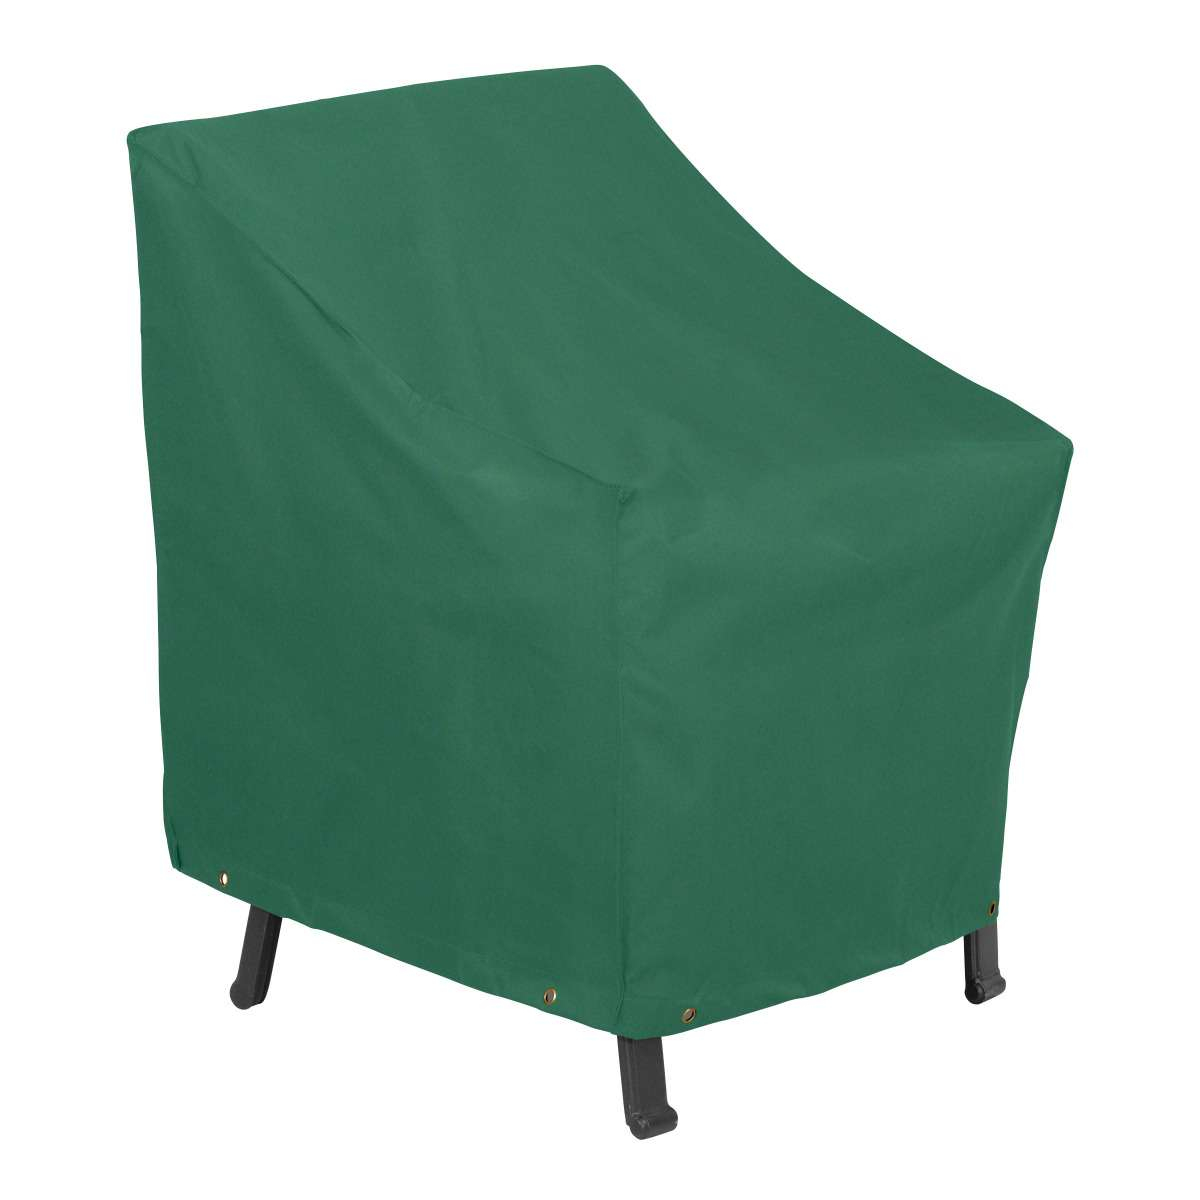 Atrium Patio Arm Chair Cover pertaining to sizing 1200 X 1200